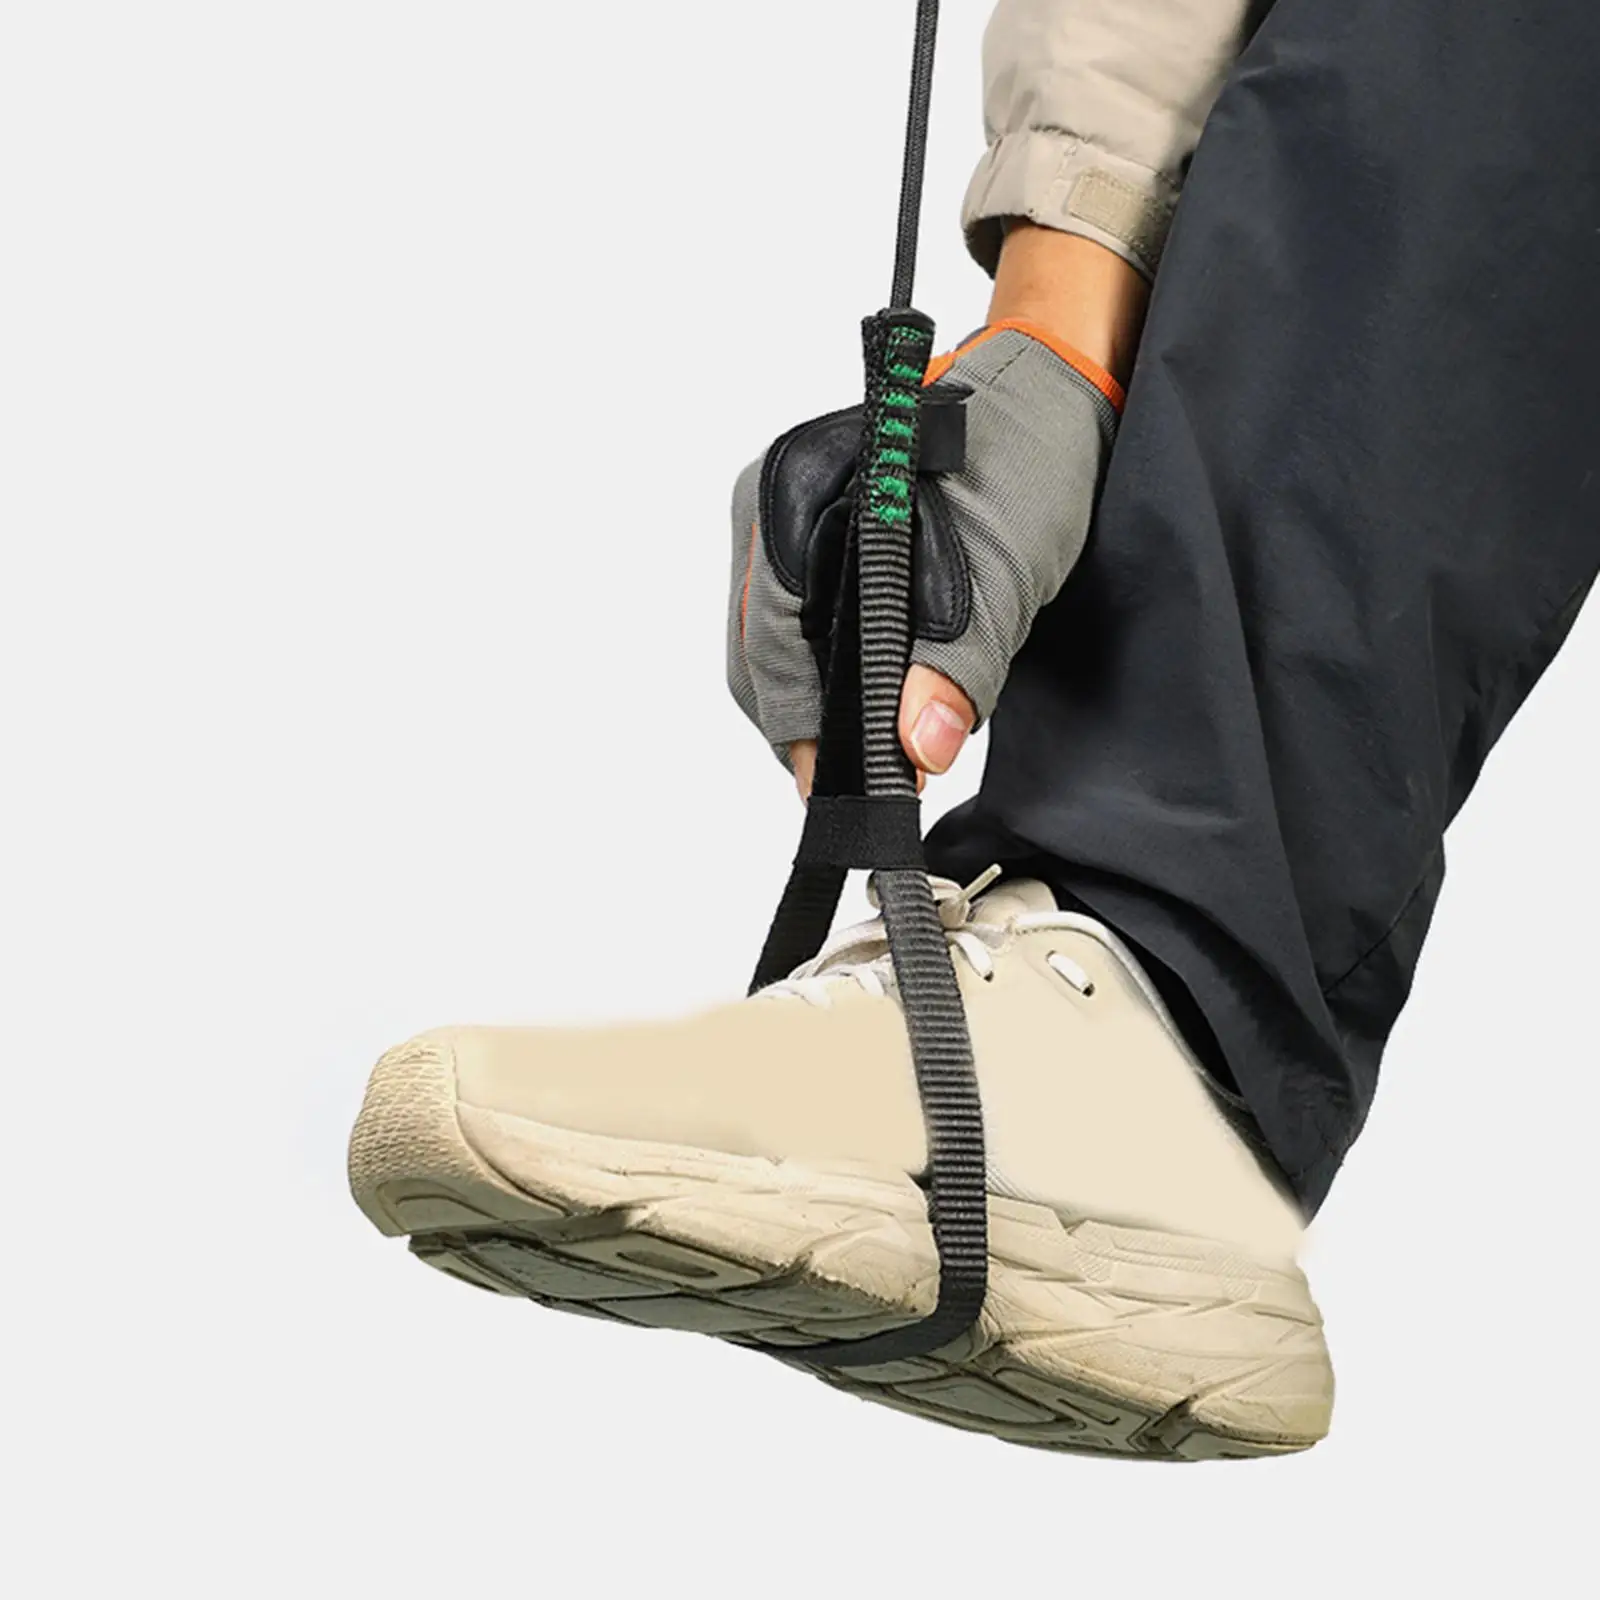 Climbing Foot Loop Ascender Adjustable Sling Gear Caving Aid Rope Ascending